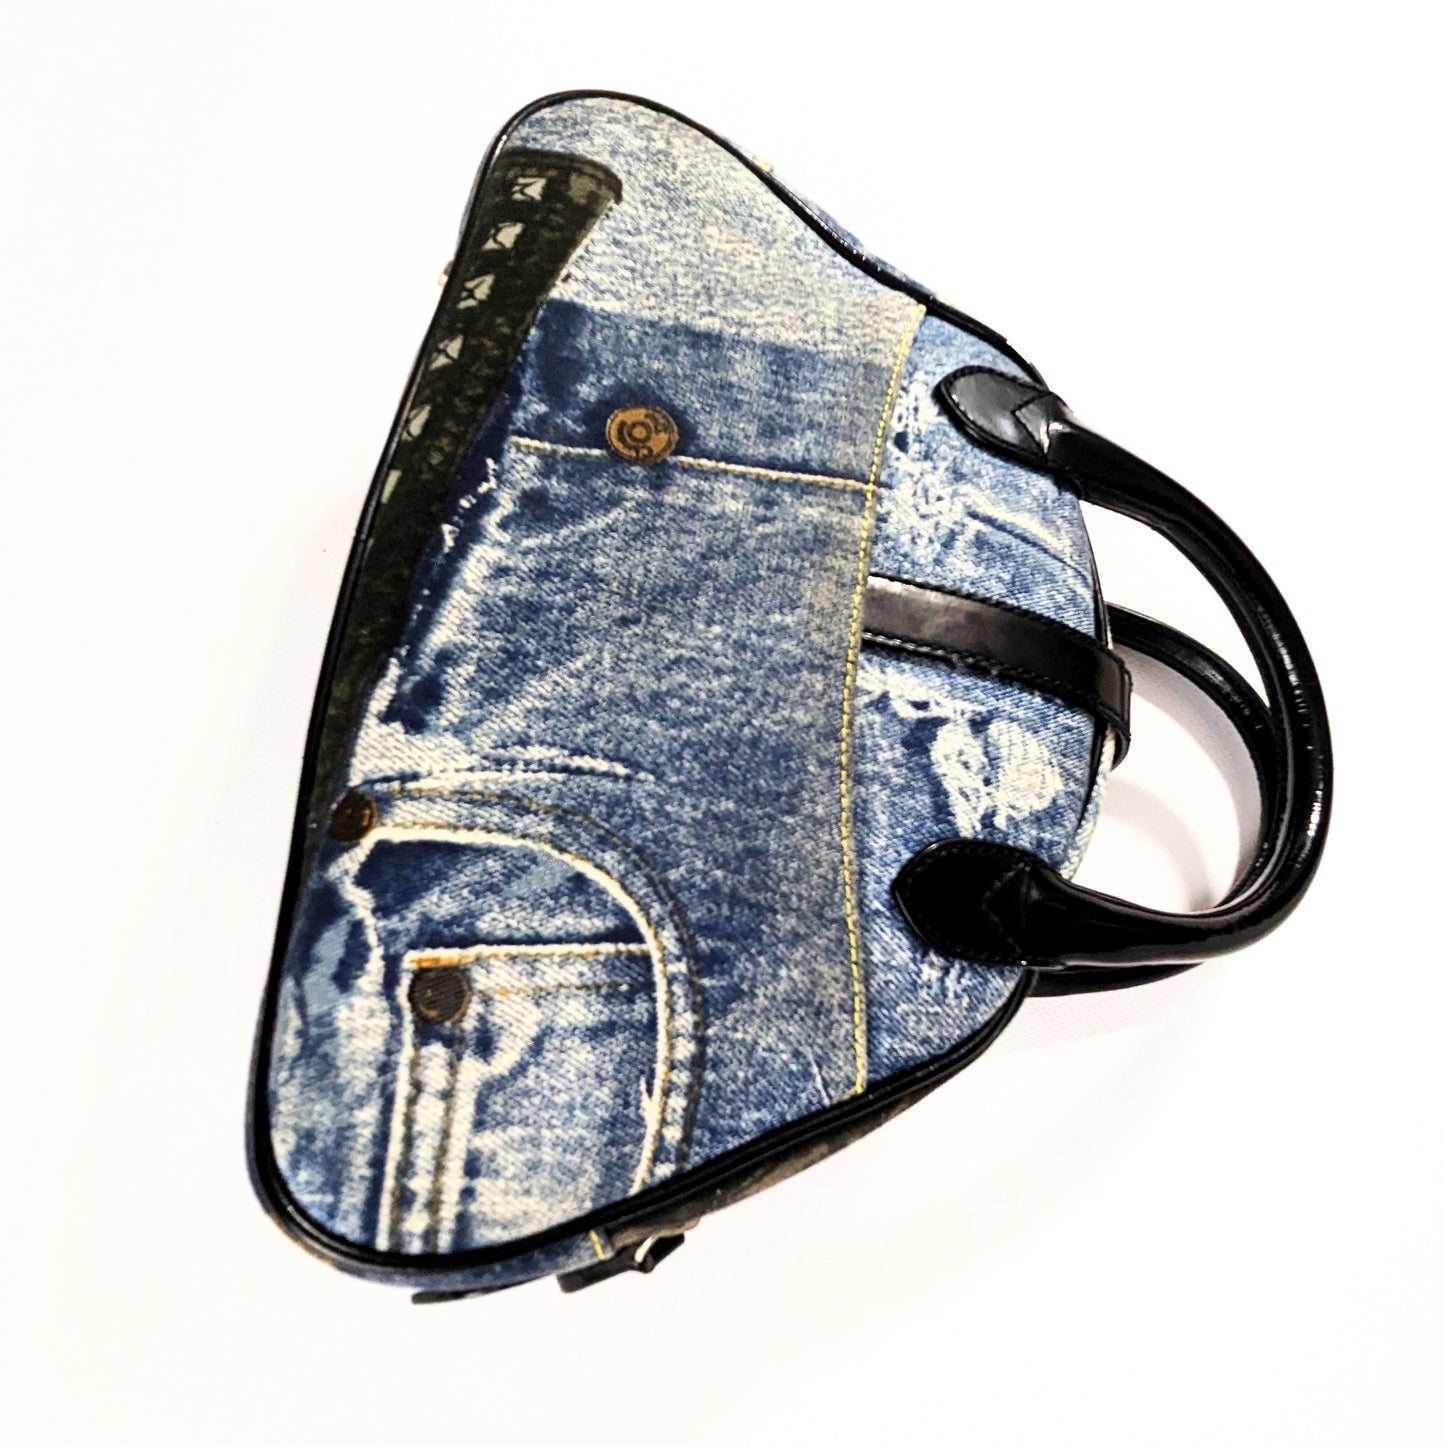 Bag Saddle Bowler Denim Dior by Galliano